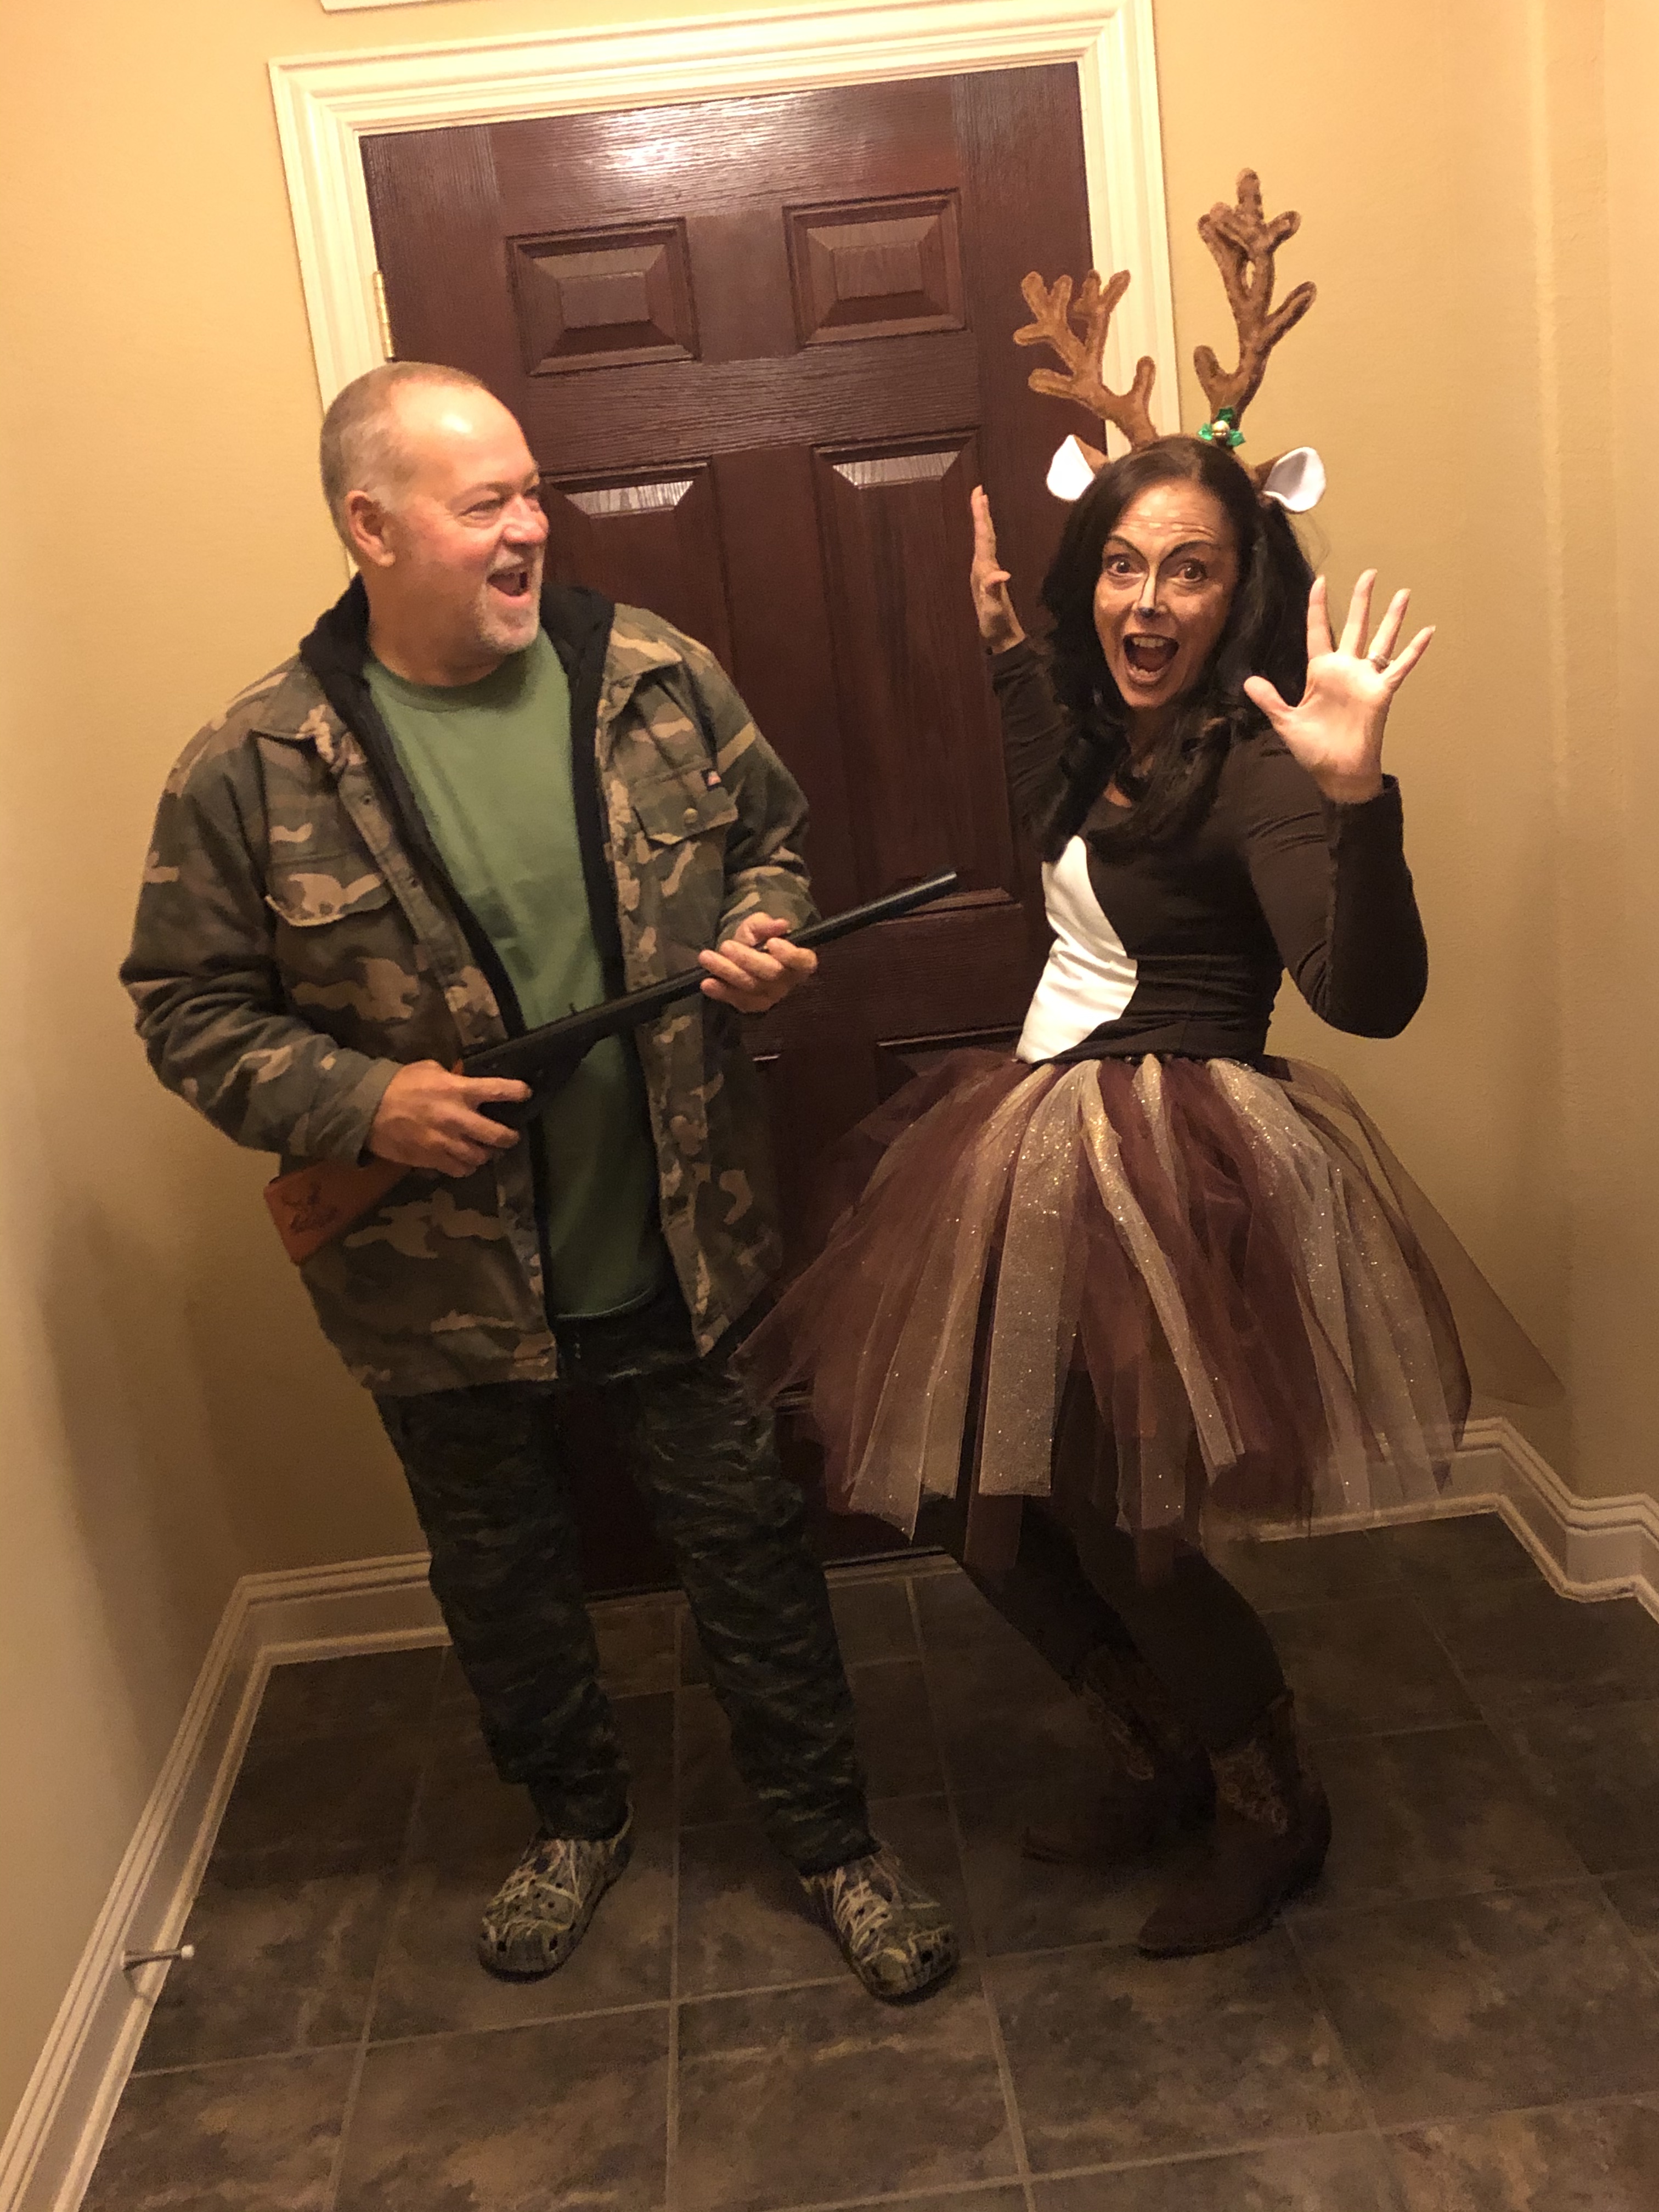 Hunter and Deer costume